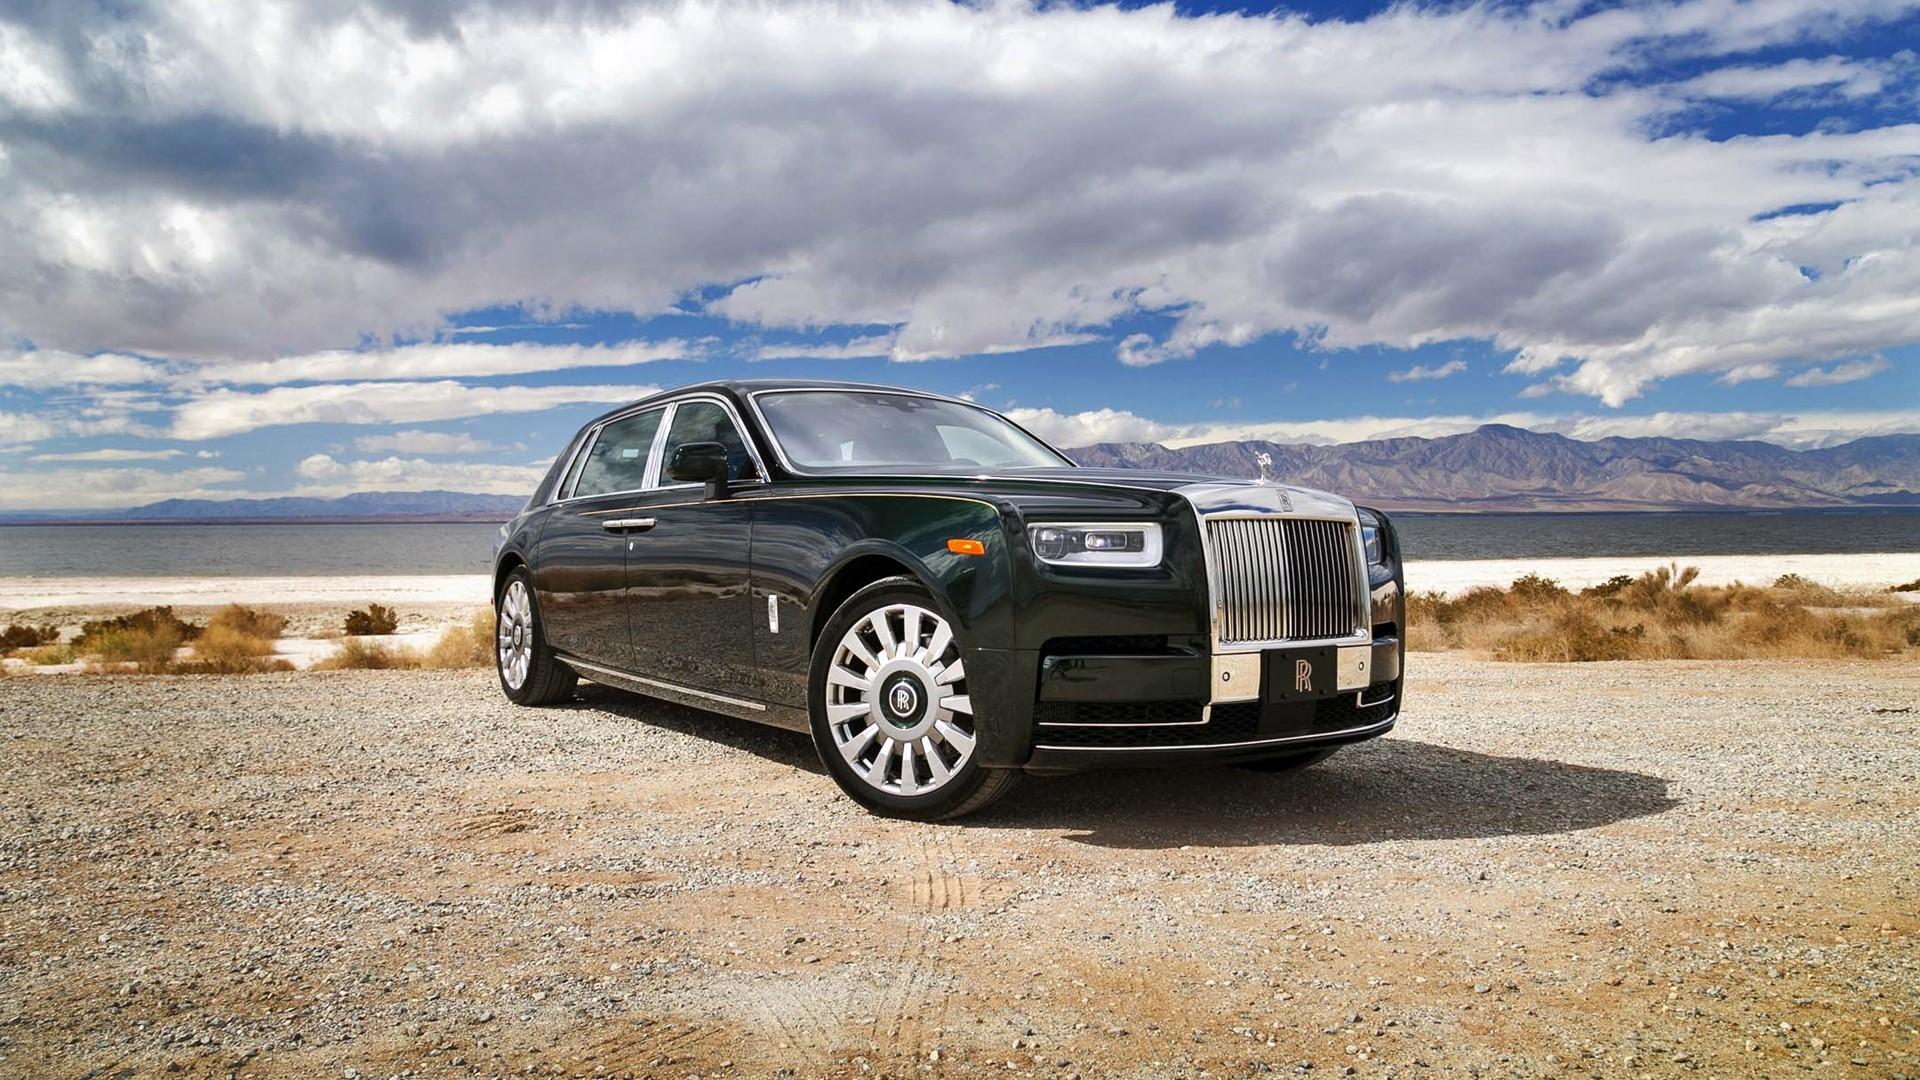 Rolls Royce Phantom First Drive Review